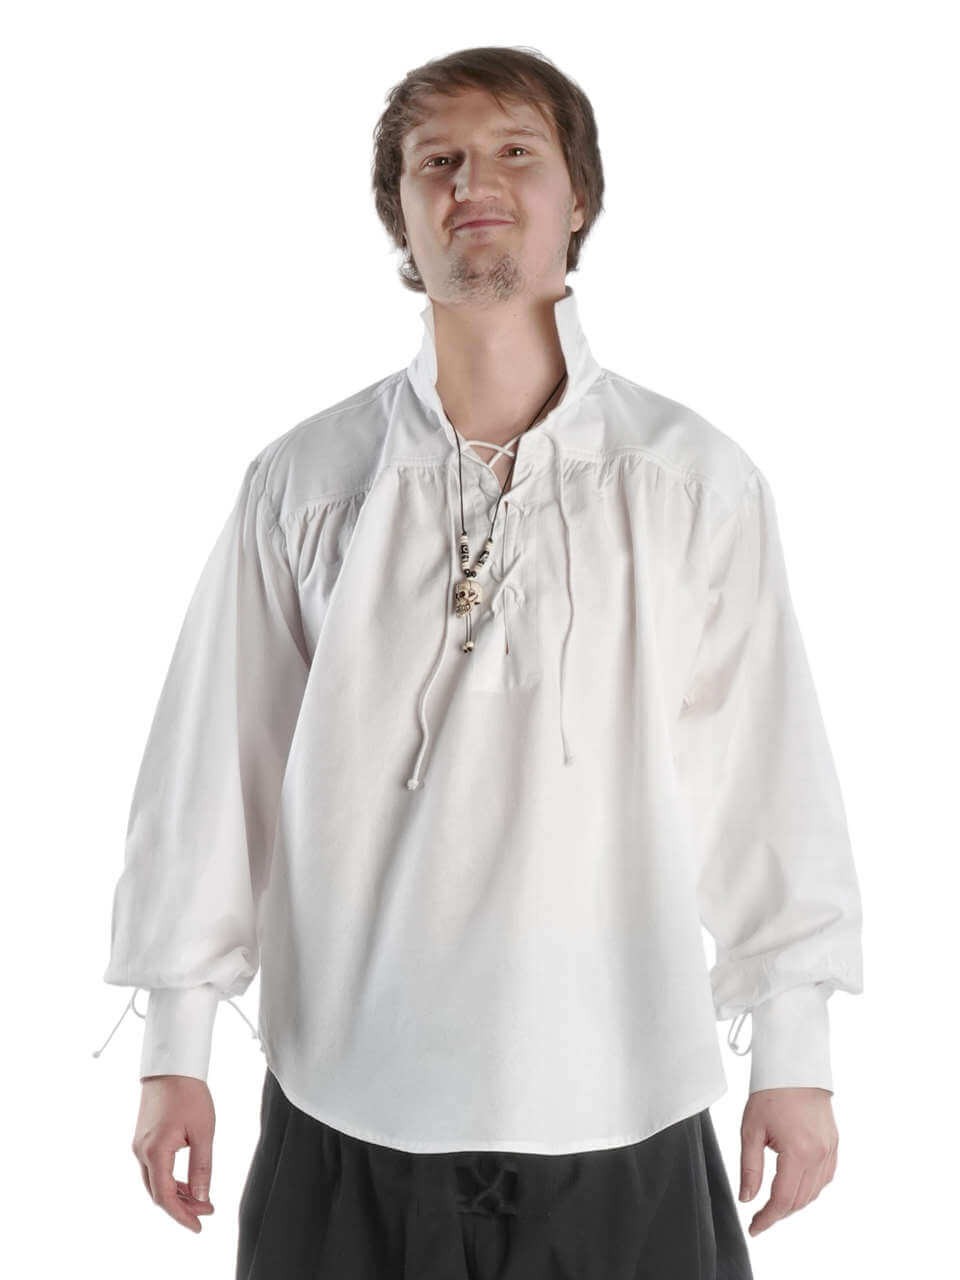 Medieval Renaissance Shirt